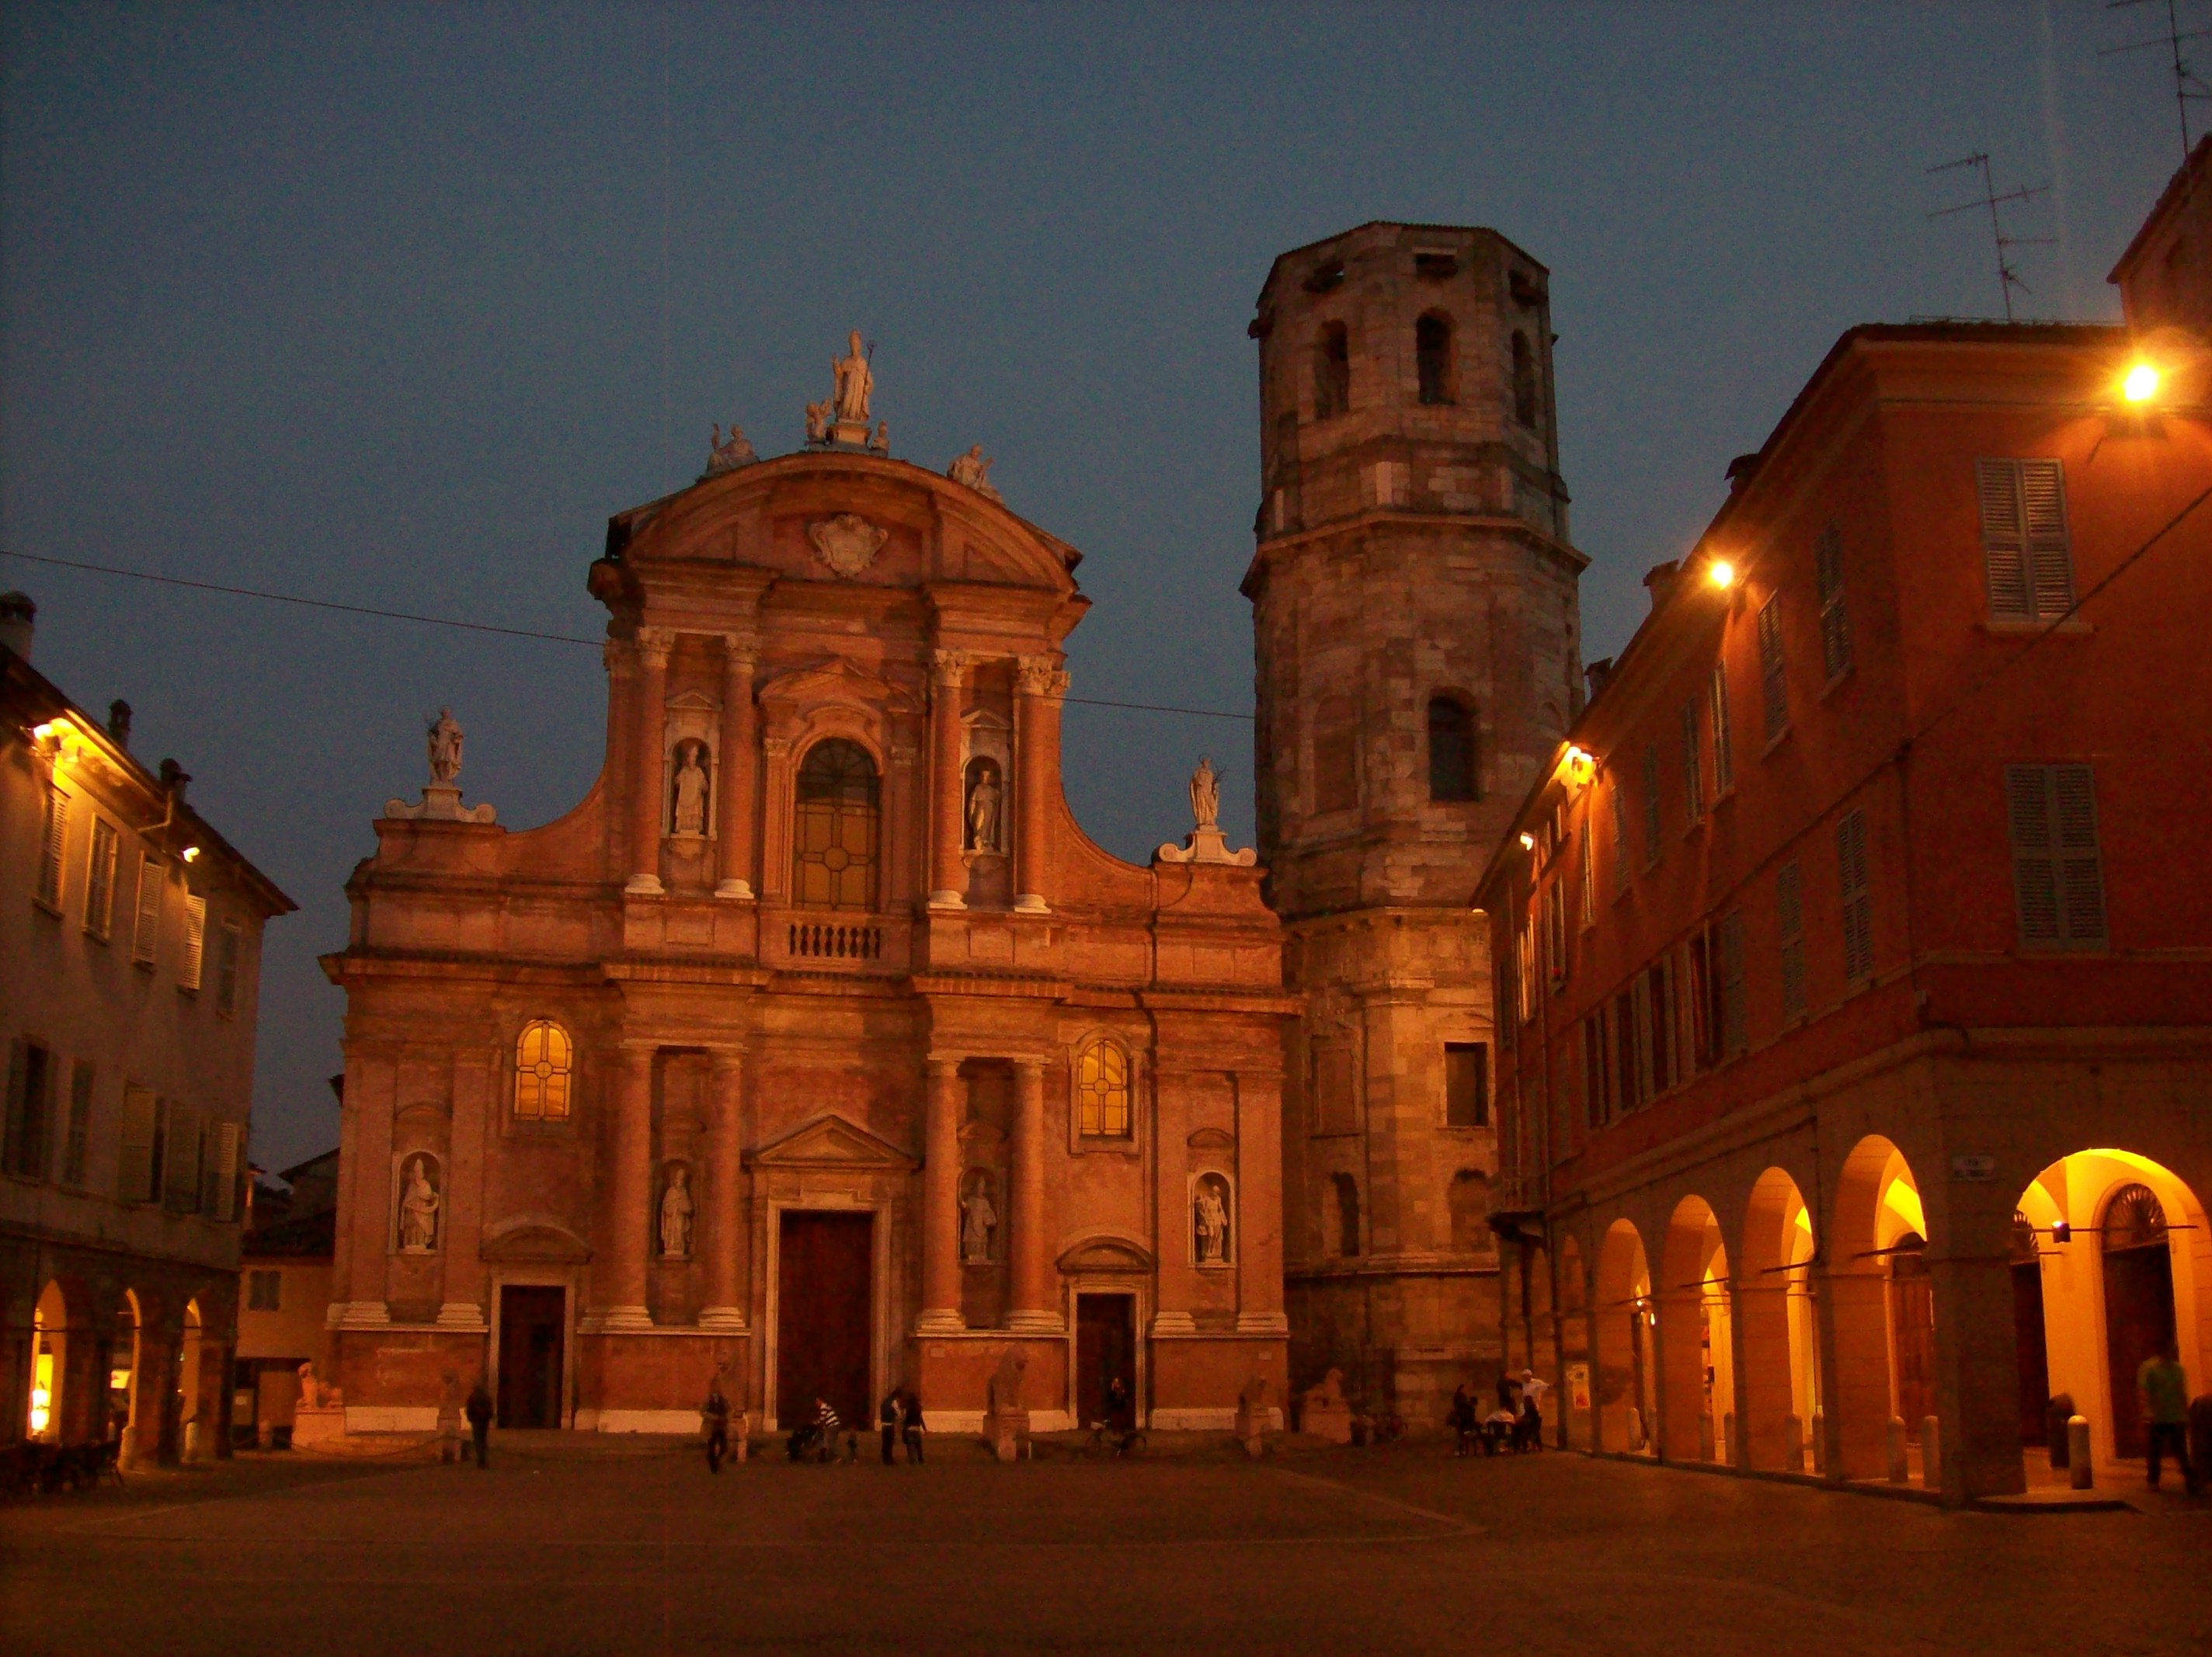 photo: https://upload.wikimedia.org/wikipedia/commons/b/b8/Piazza_San_Prospero_2_ReggioEmilia.JPG